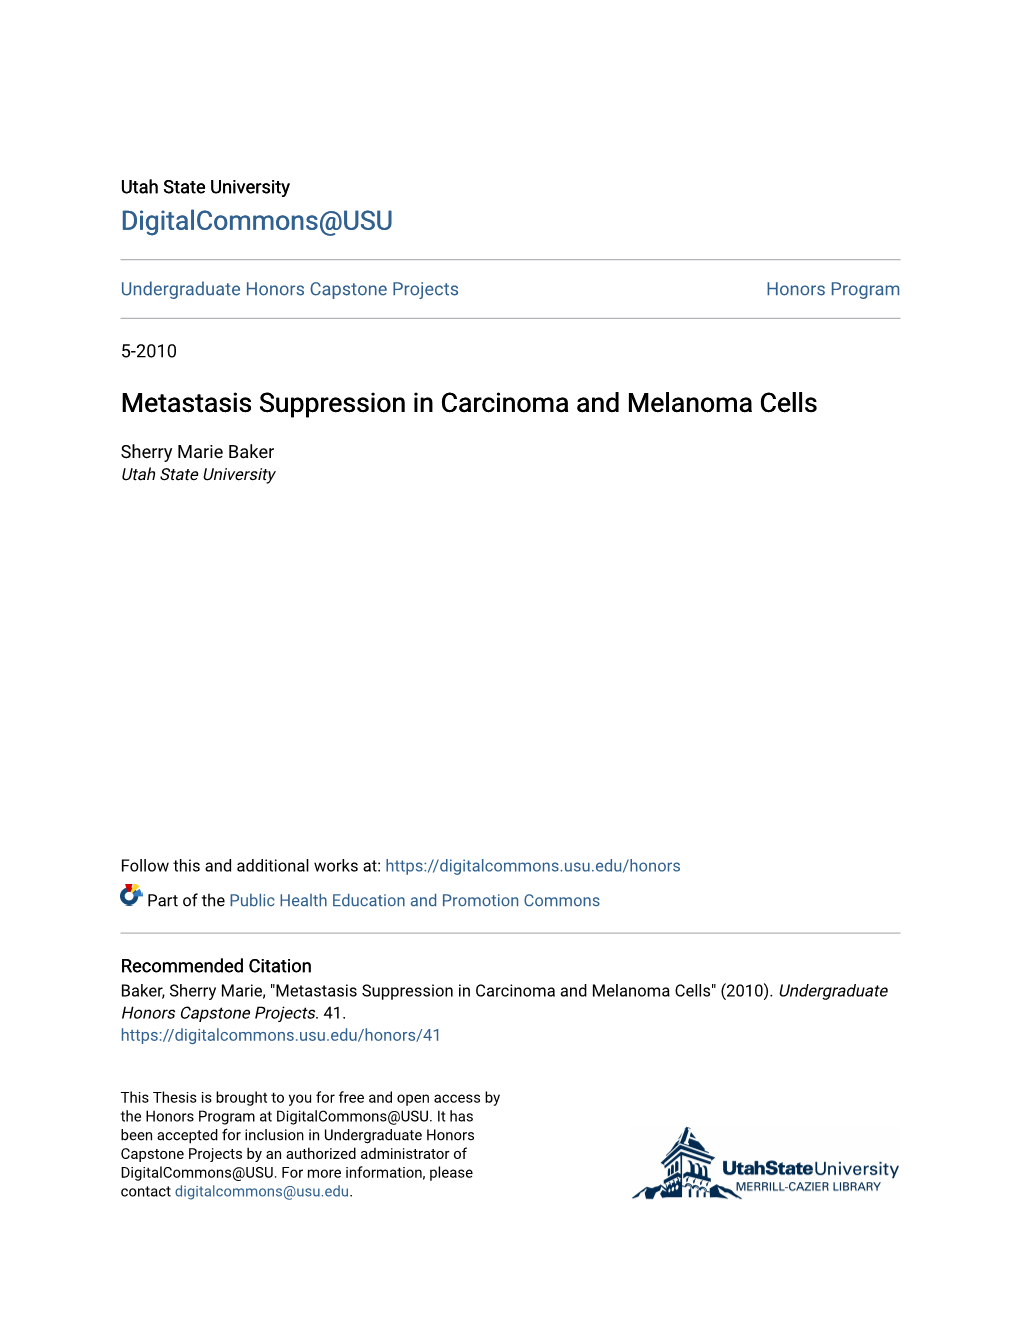 Metastasis Suppression in Carcinoma and Melanoma Cells